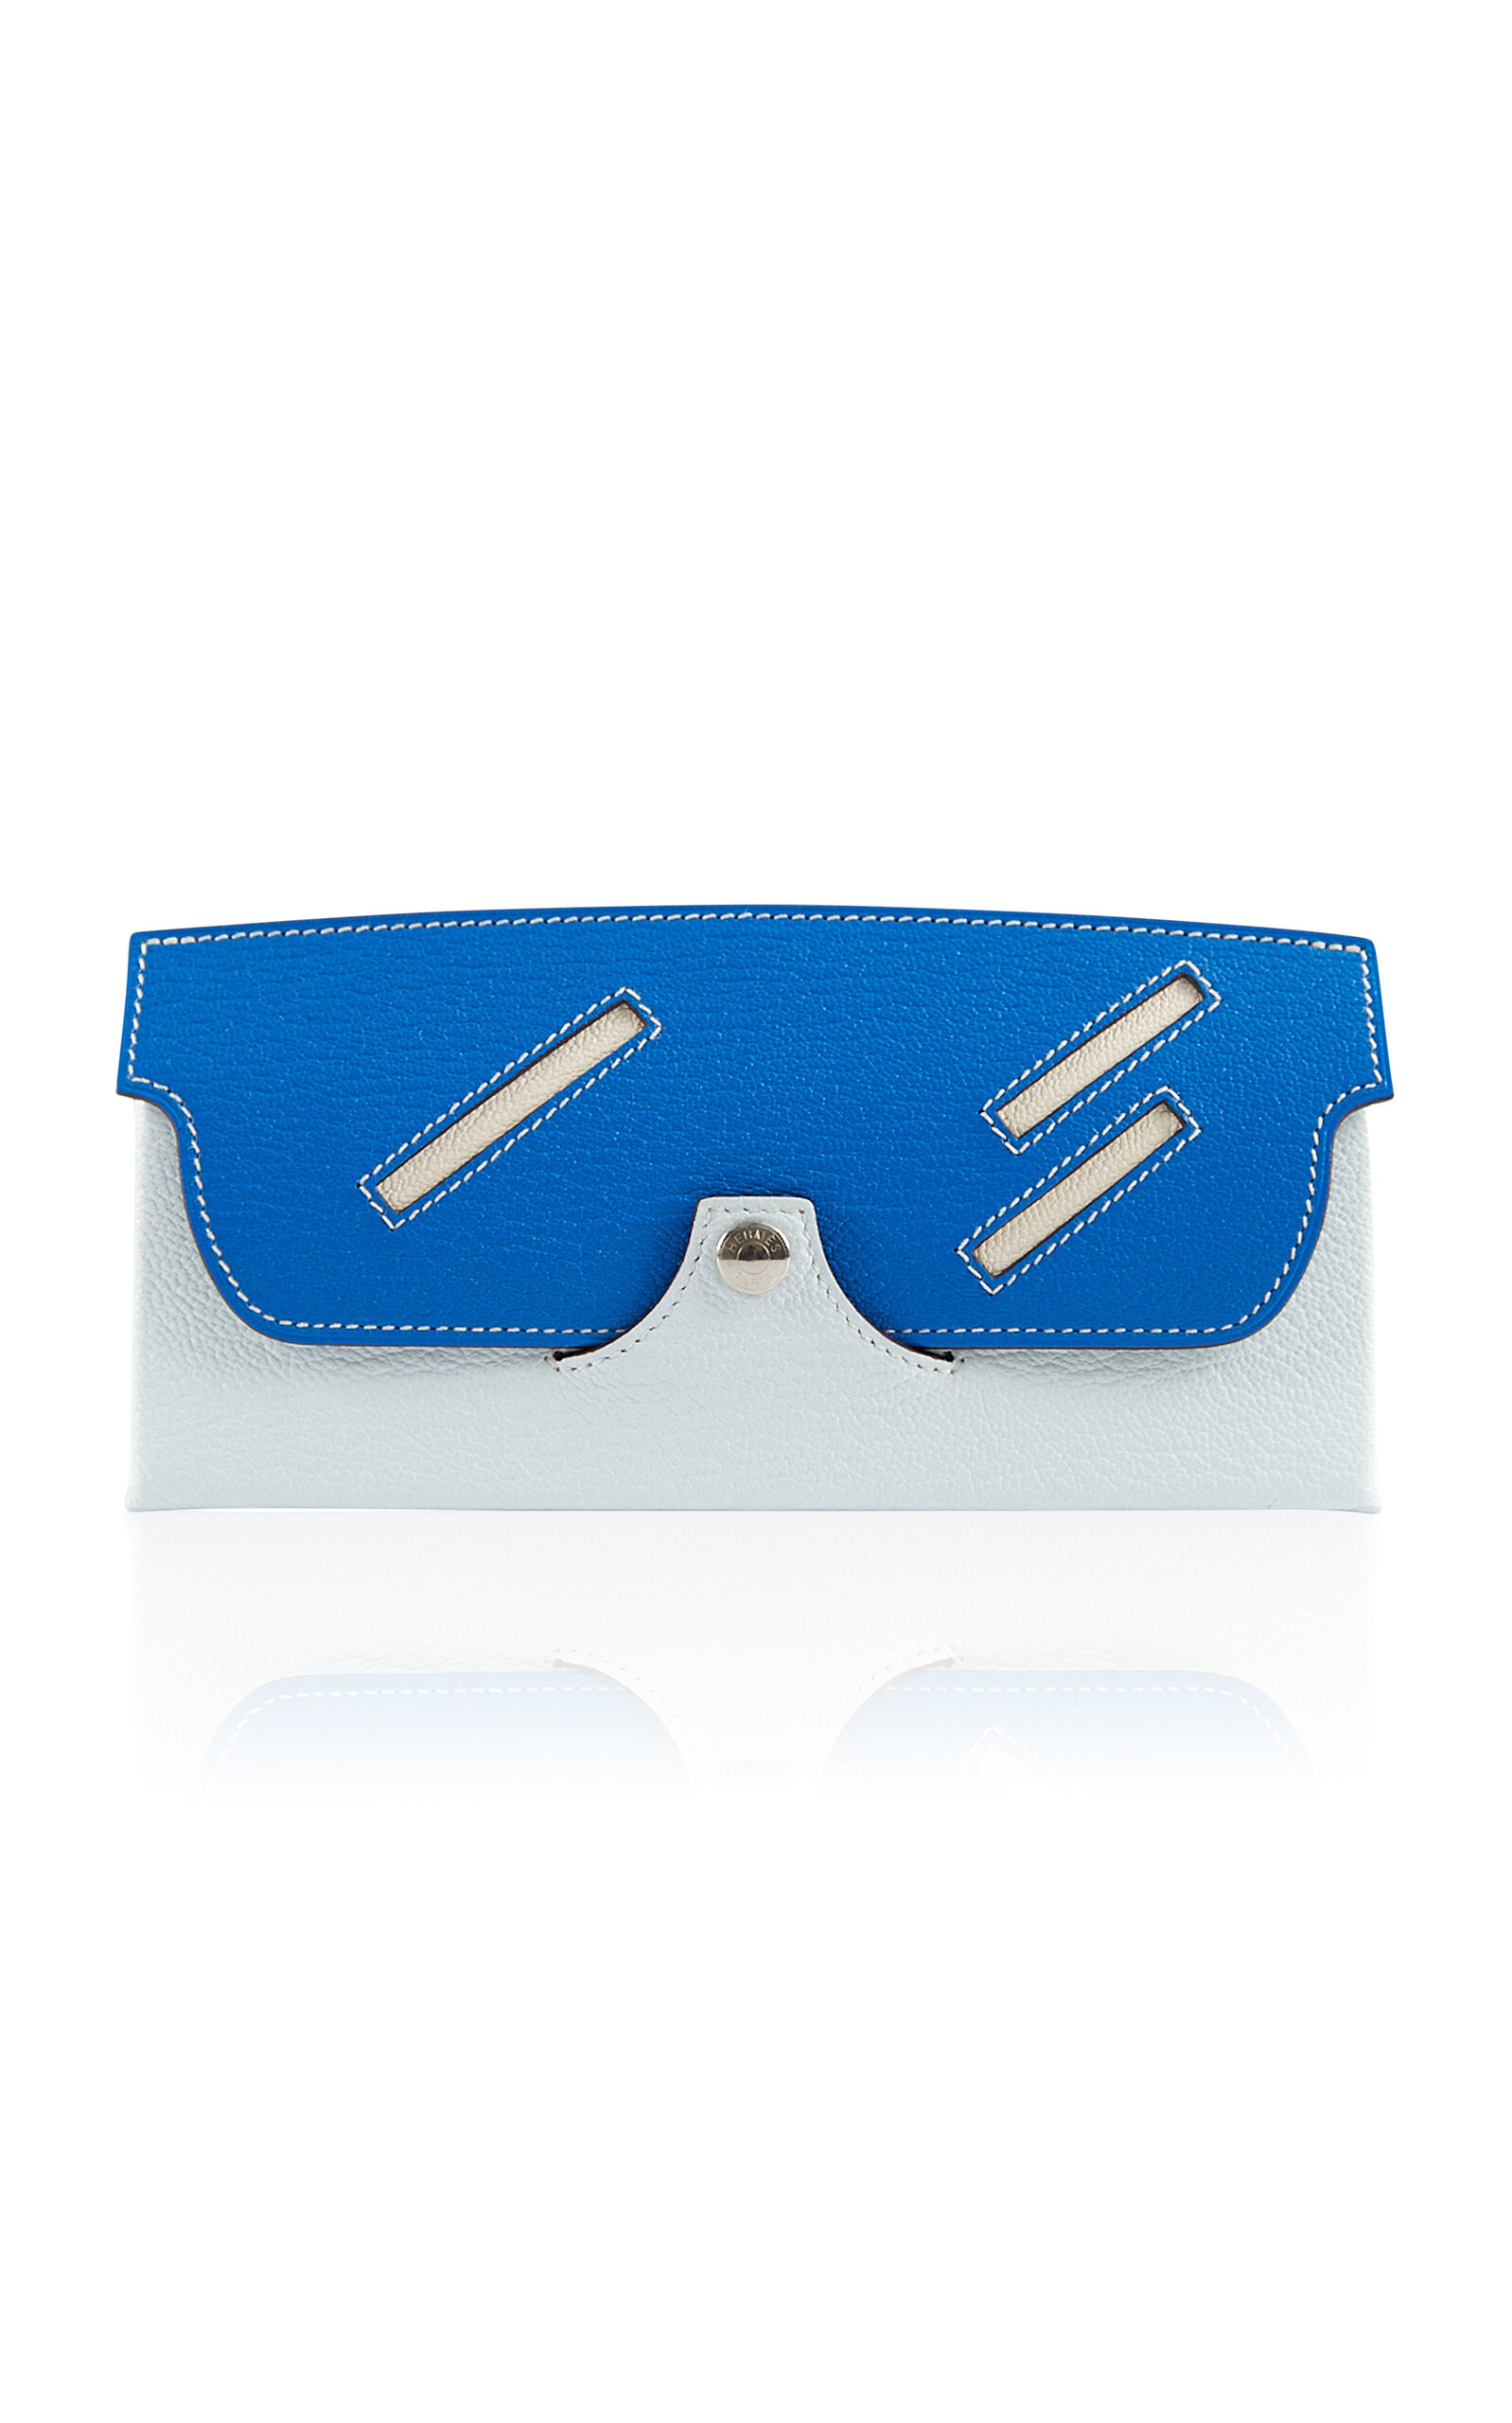 Hermès - Pristine In The Loop Wink Glasses Case in Chevre Mysore Leather - Blue - OS - Only At Moda Operandi